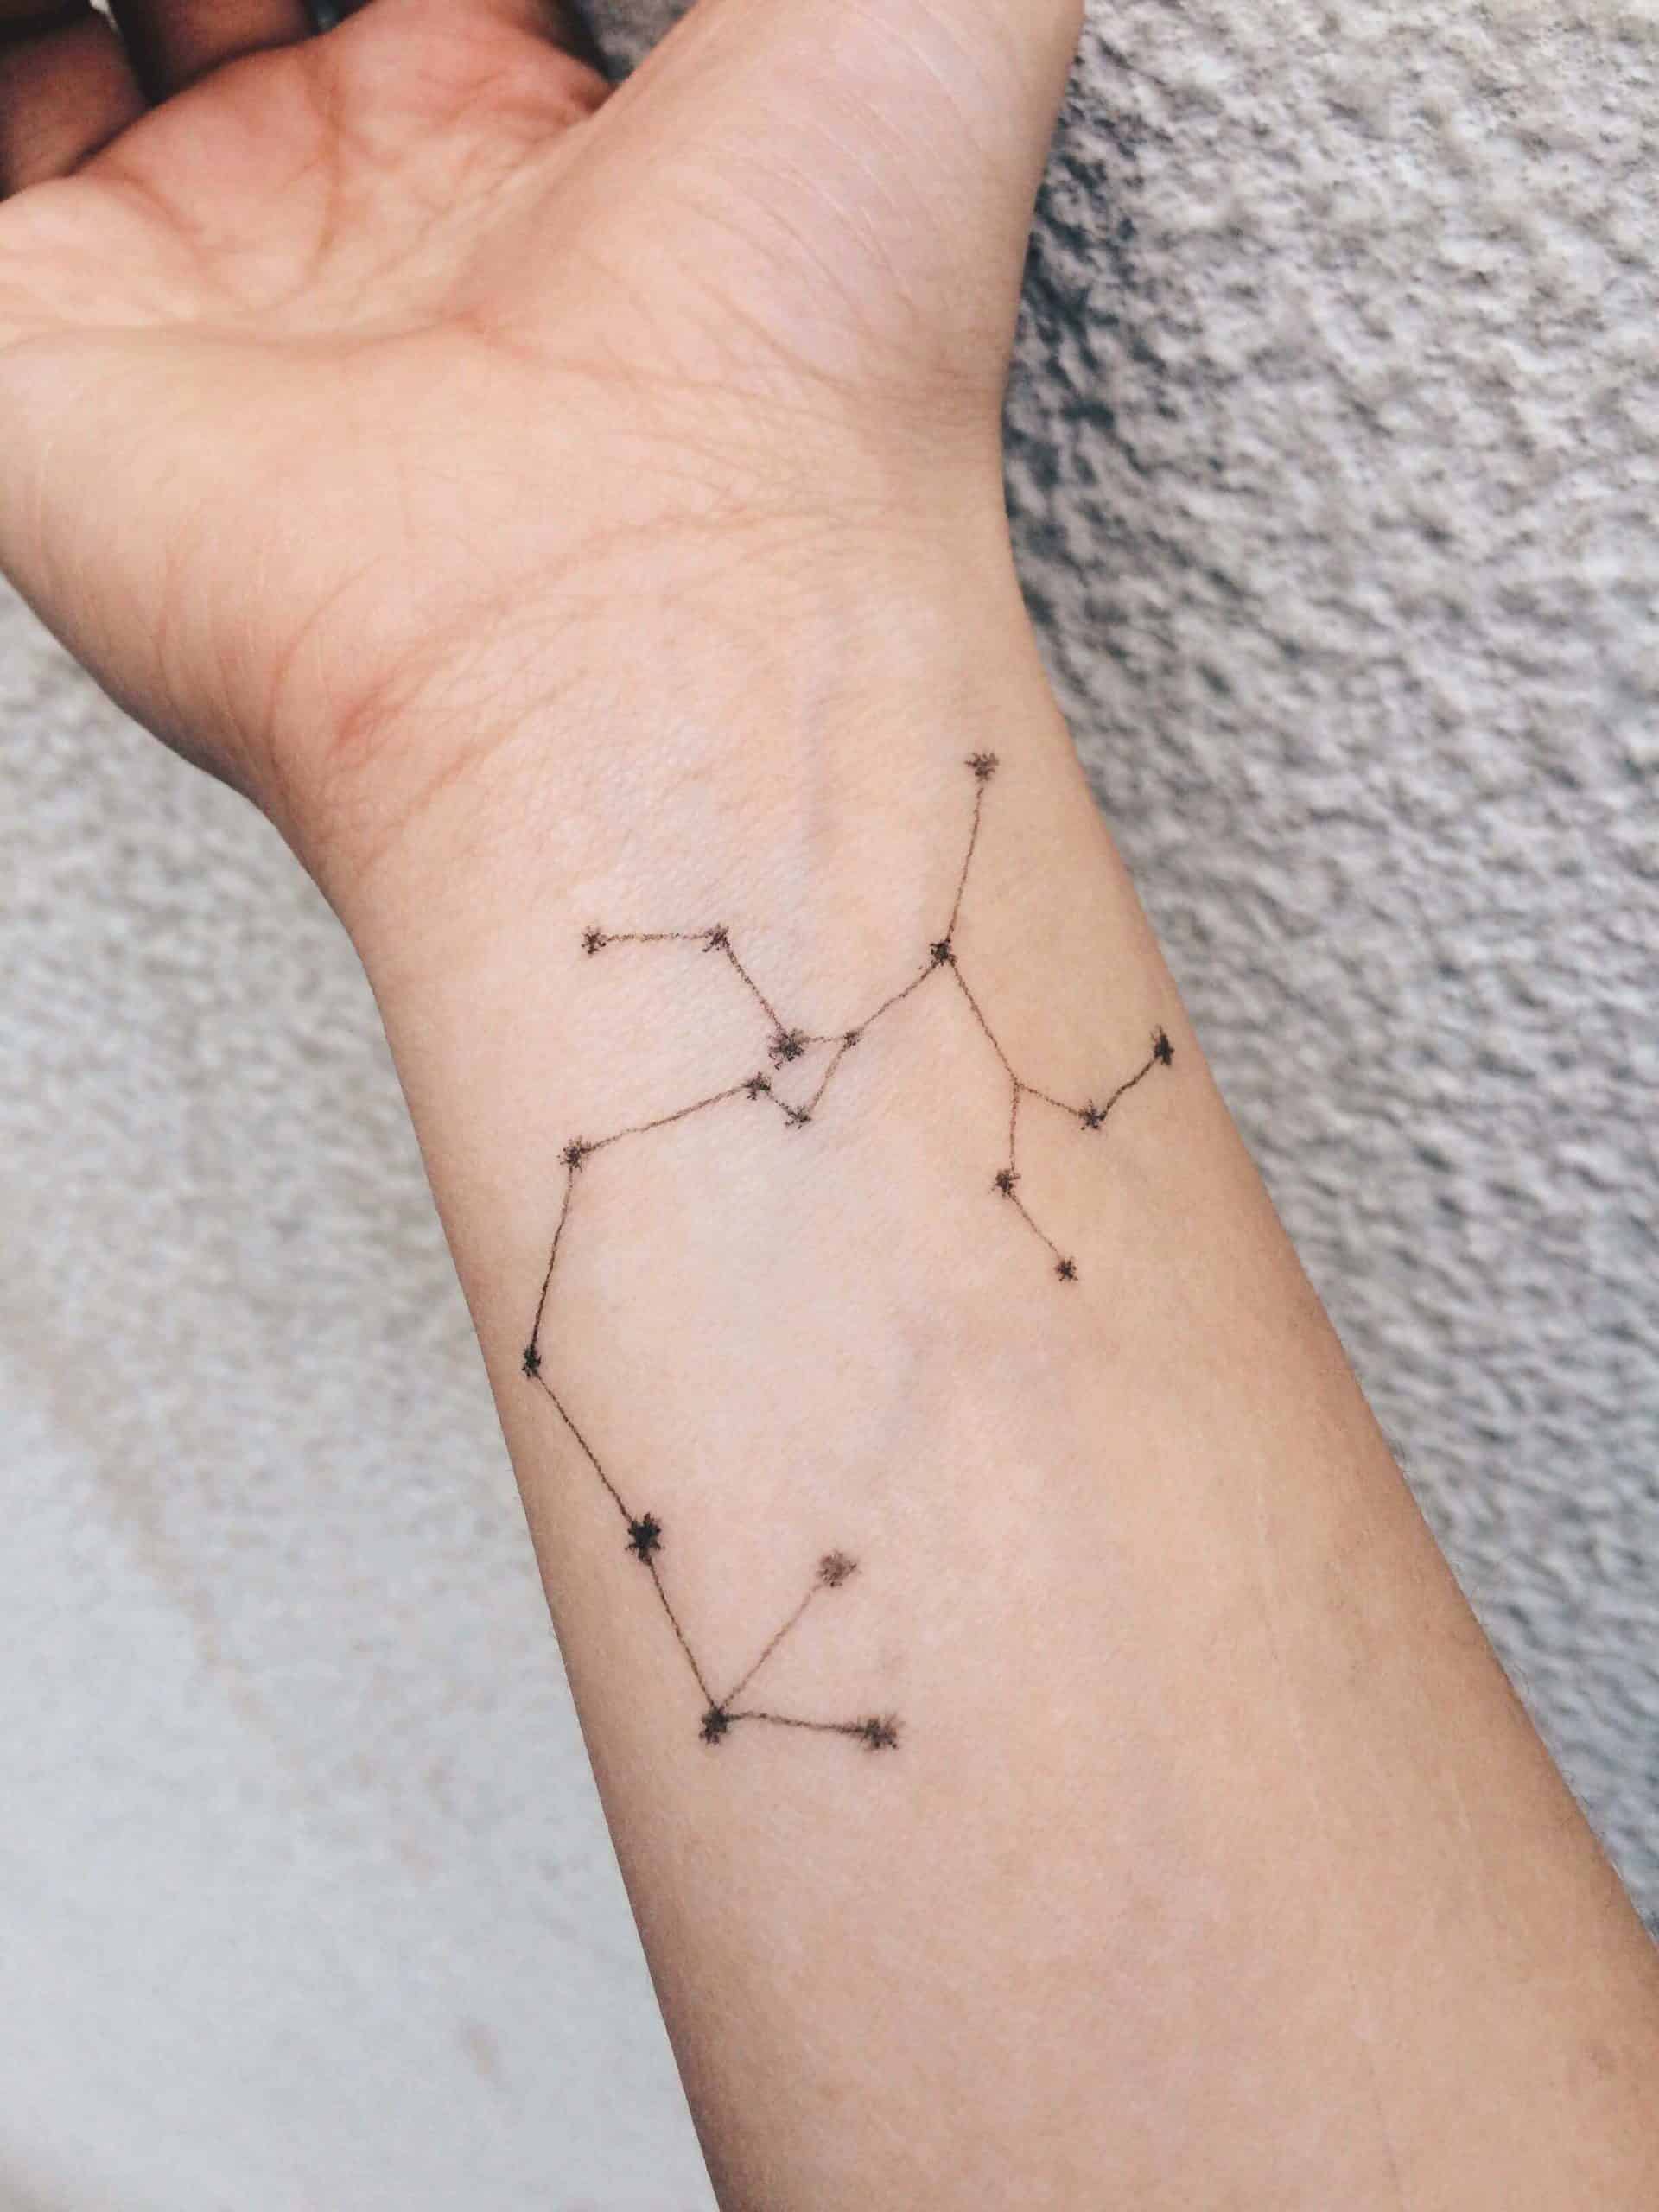 sagittarius tattoo on wrist